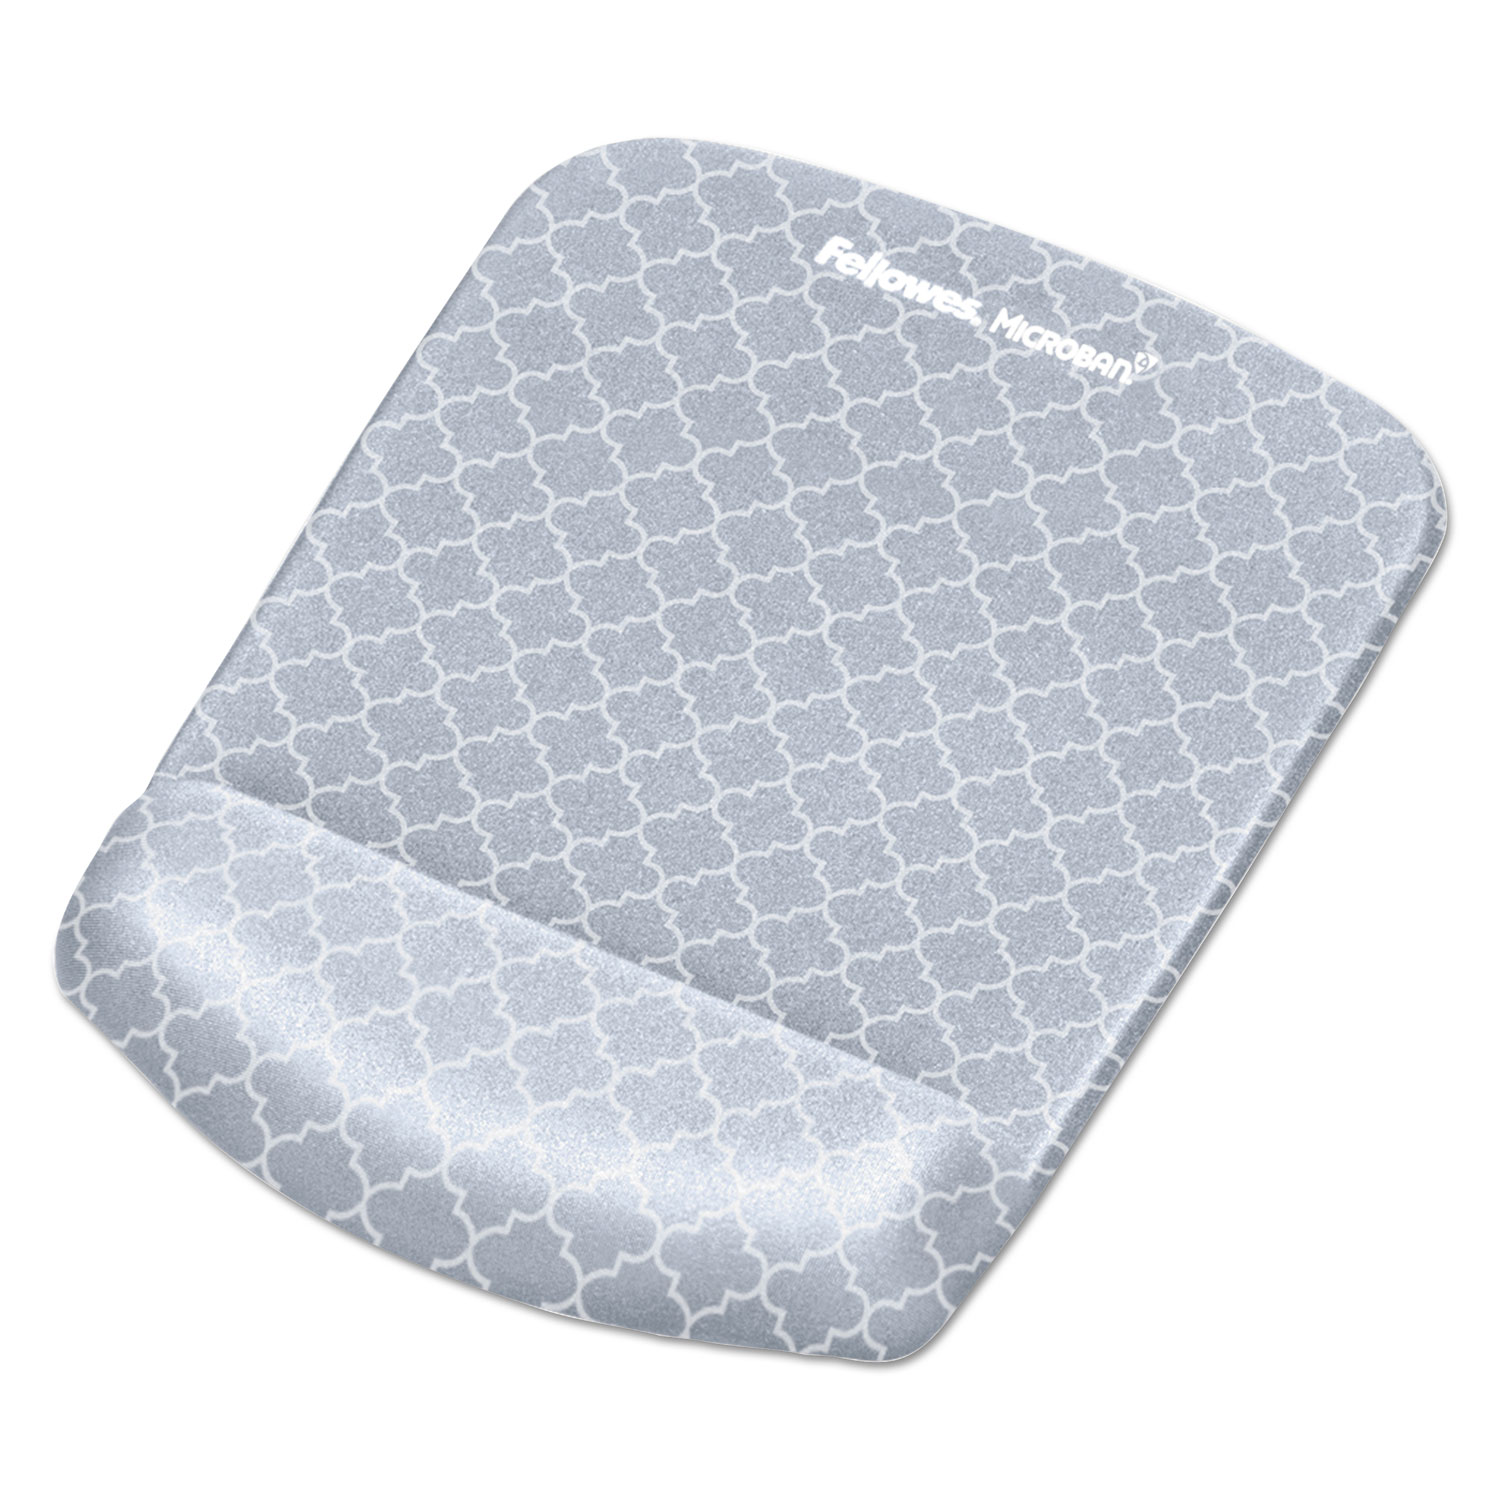  Fellowes 9549701 PlushTouch Mouse Pad with Wrist Rest, 7 1/4 x 9 3/8 x 1, Gray/White Lattice (FEL9549701) 